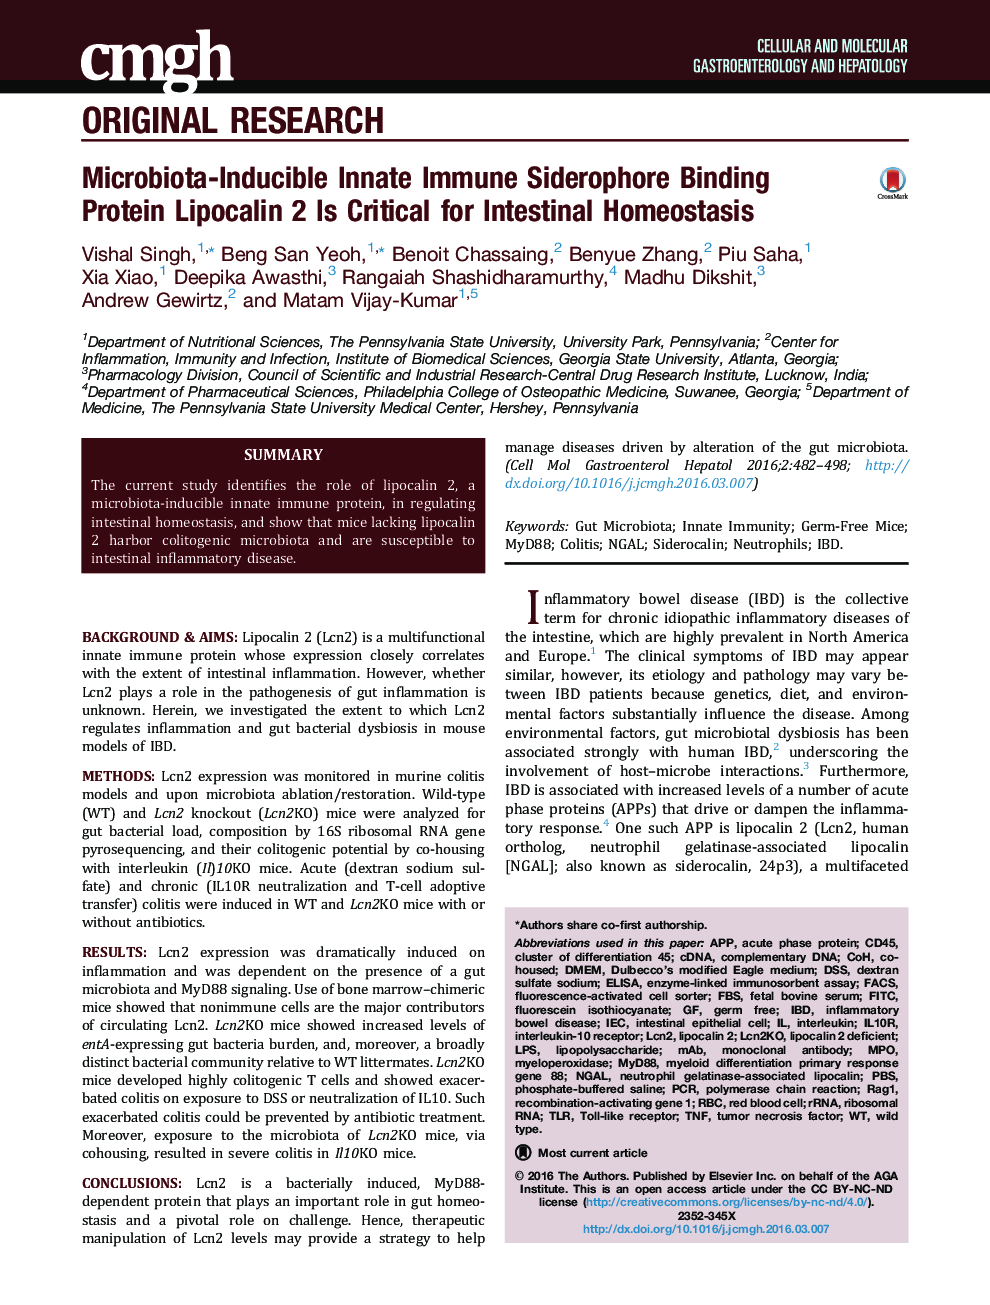 Microbiota-Inducible Innate Immune Siderophore Binding Protein Lipocalin 2 Is Critical for Intestinal Homeostasis